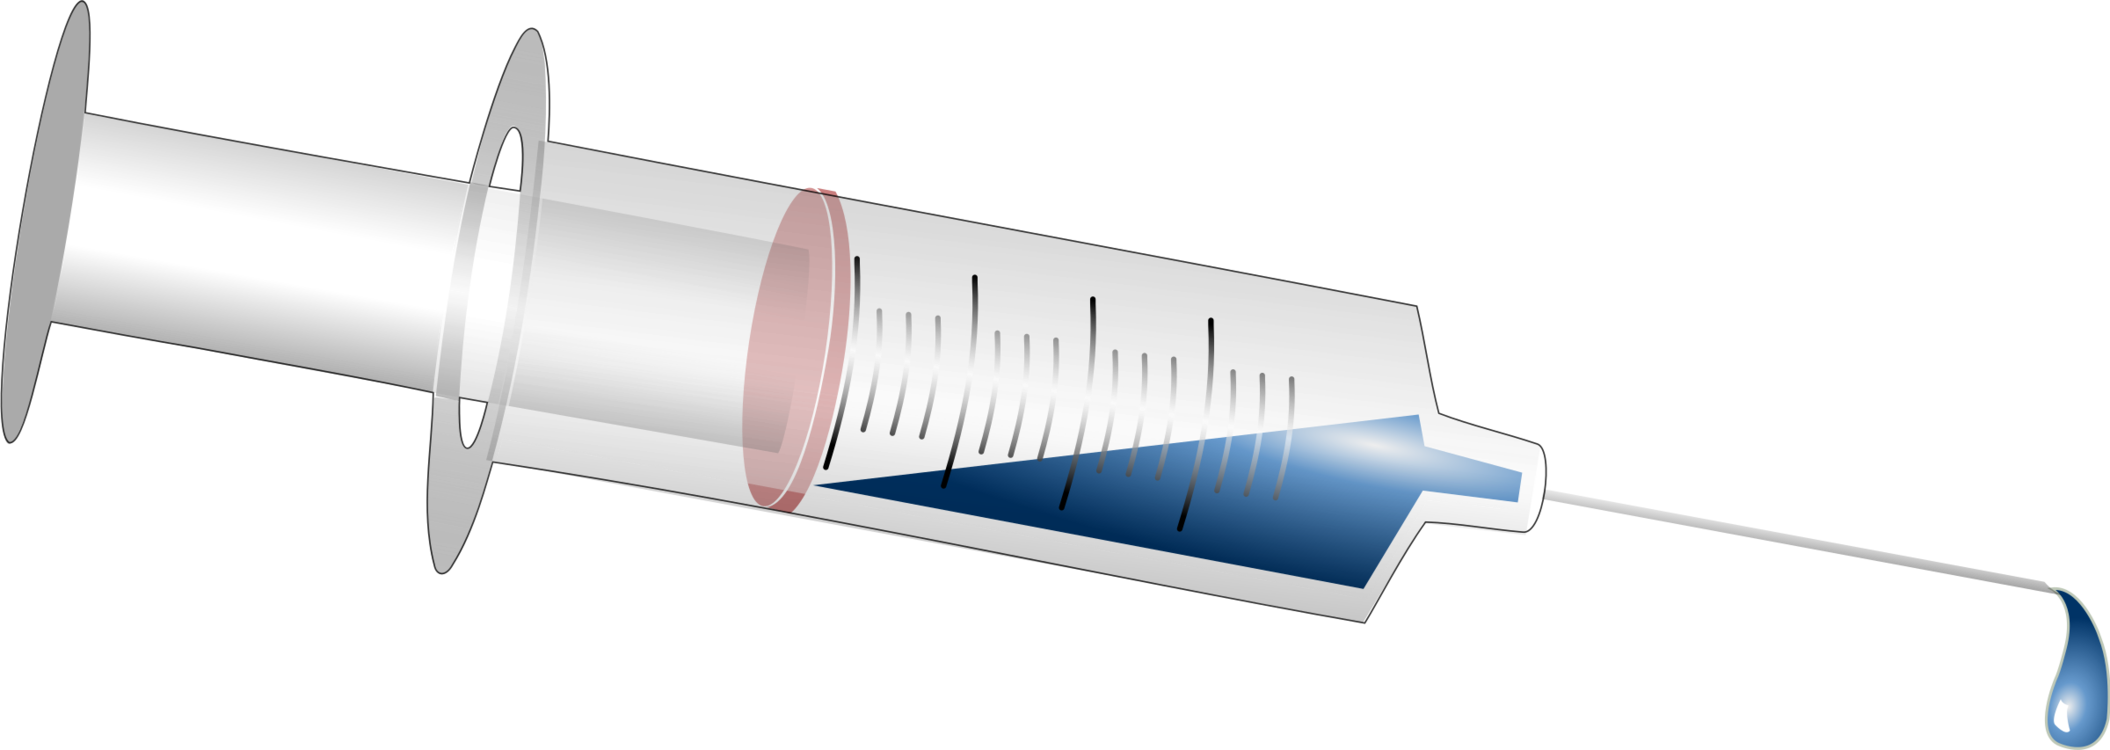 Medical Syringe With Drop